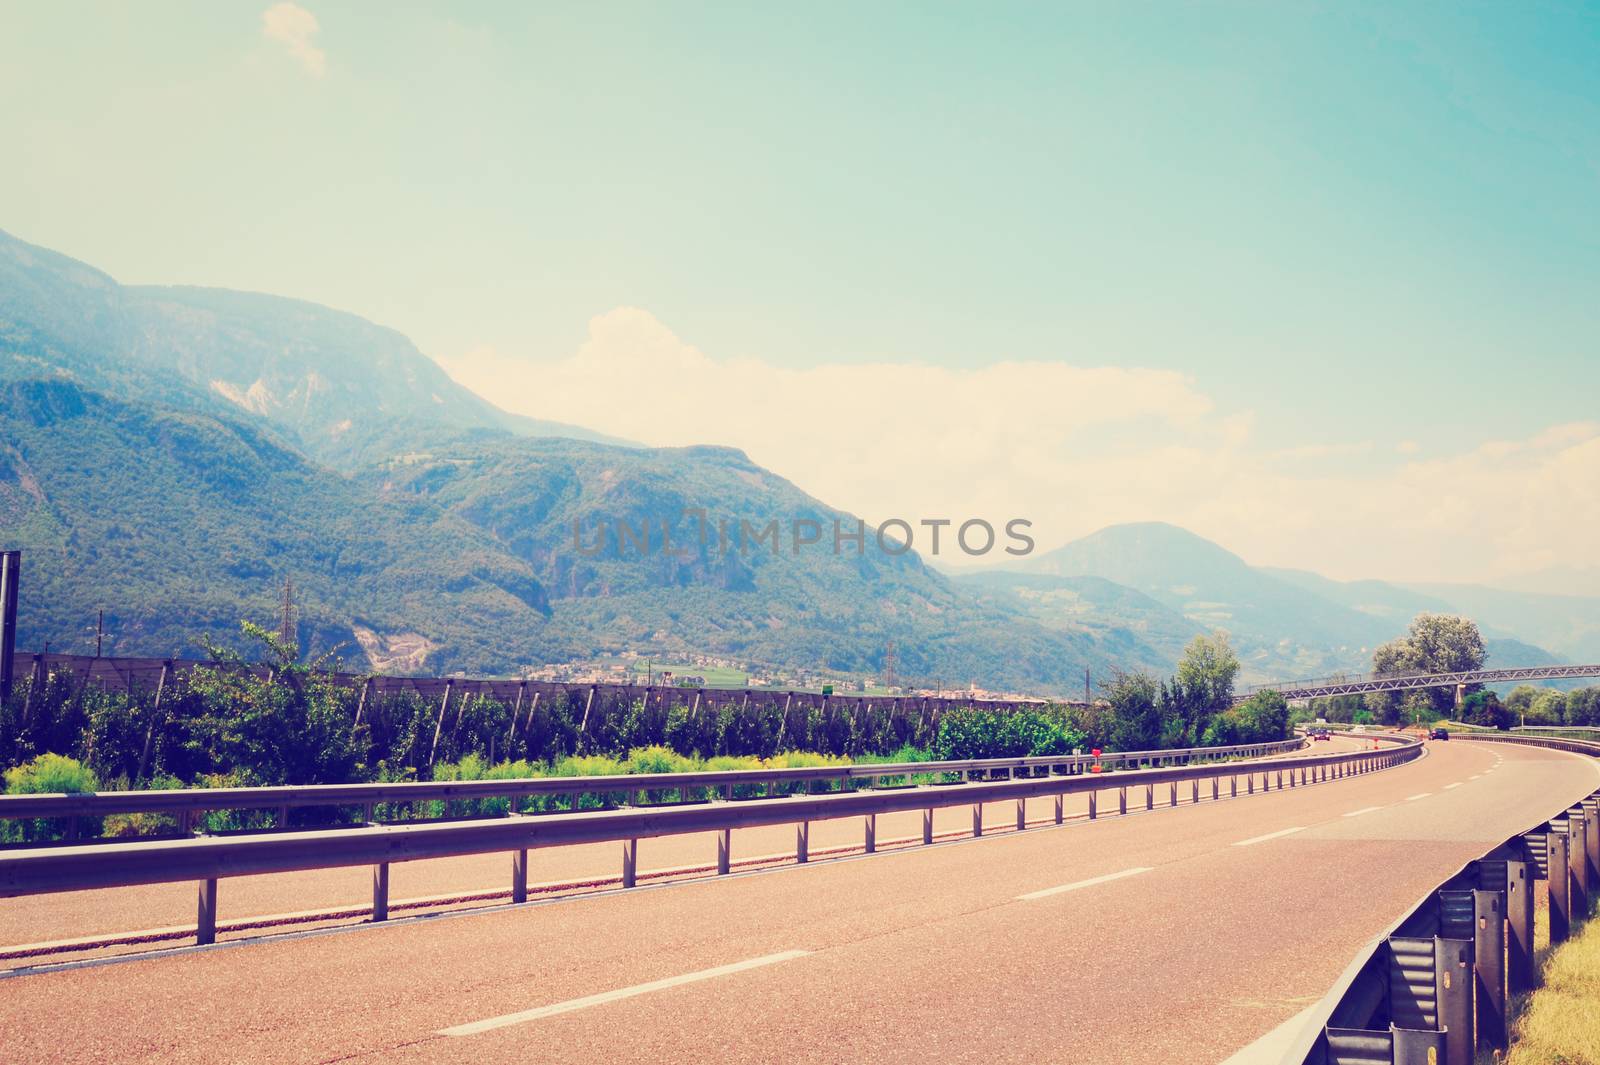  Asphalt Road in the Alps, Instagram Effect